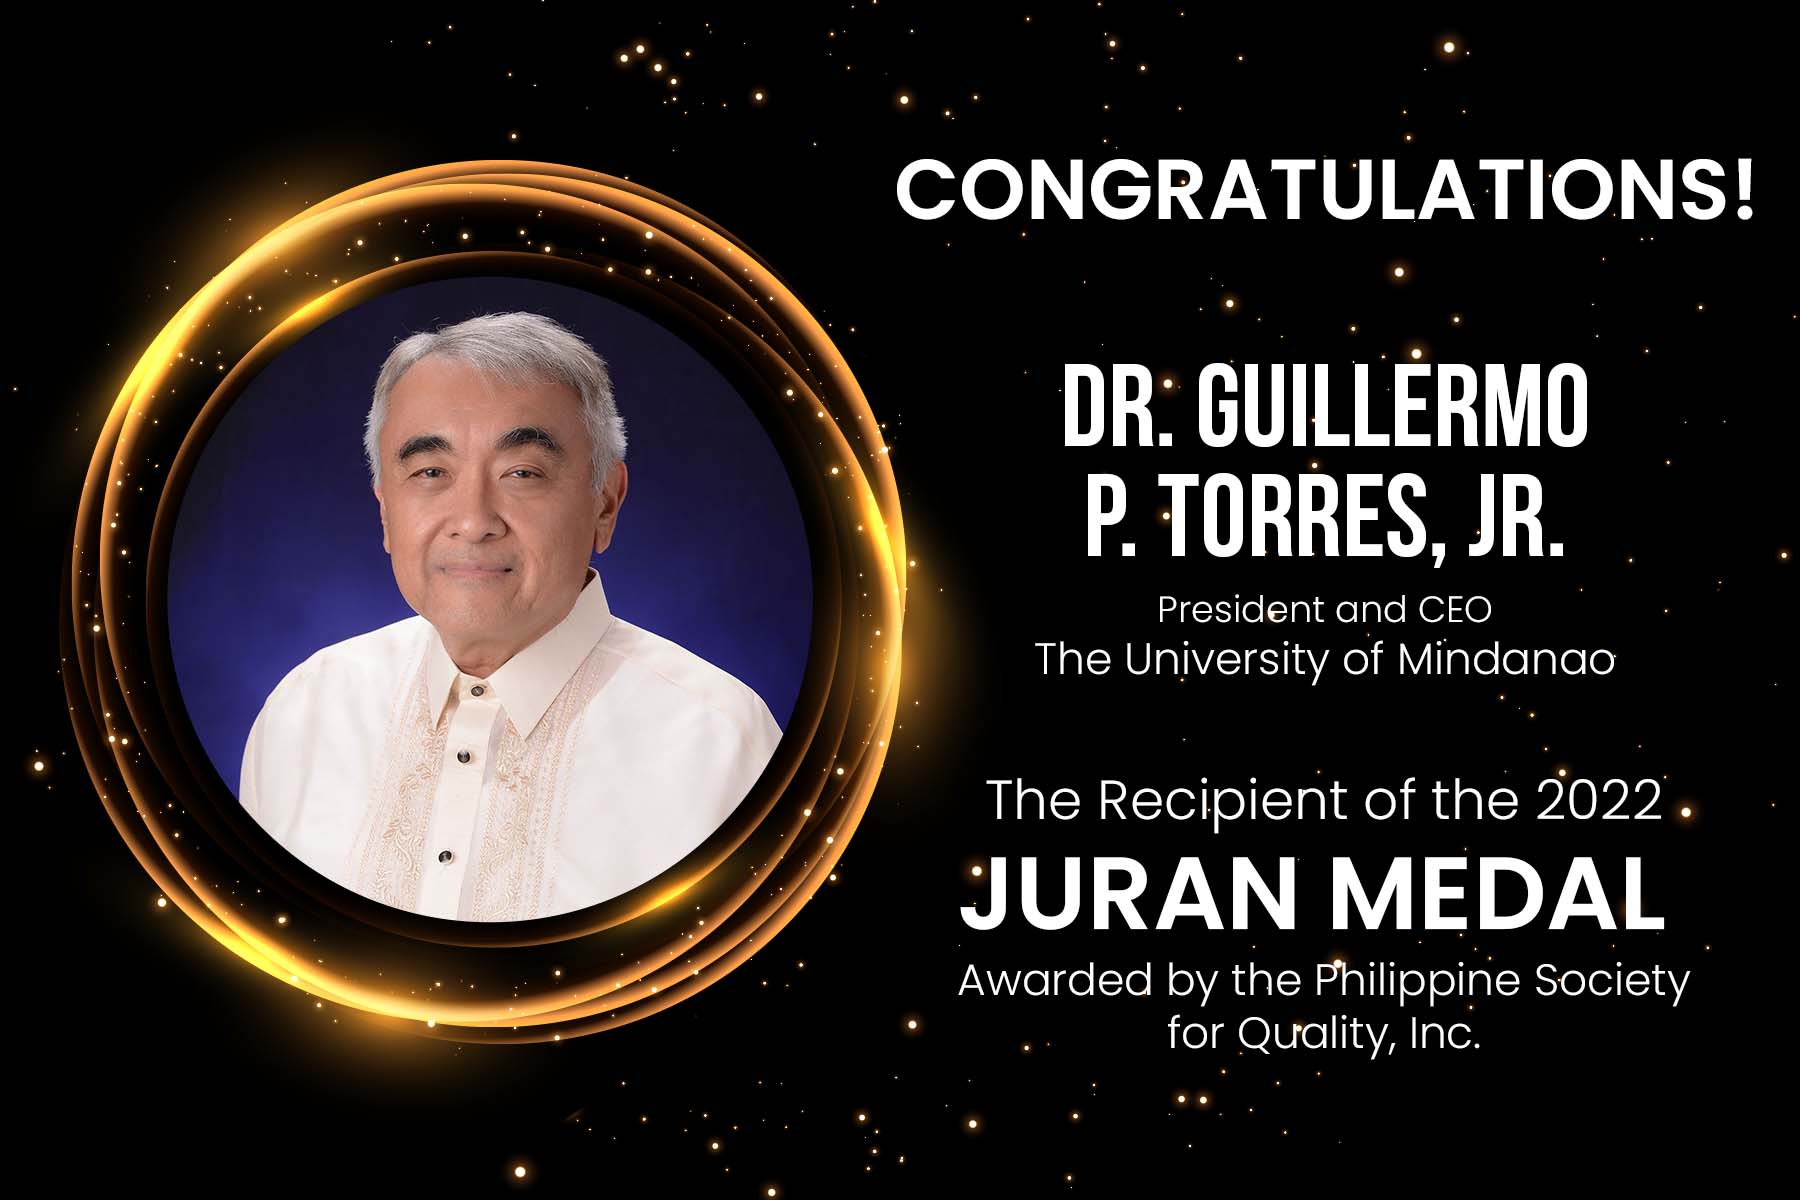 Dr. Torres is awarded the Juran Medal 2022